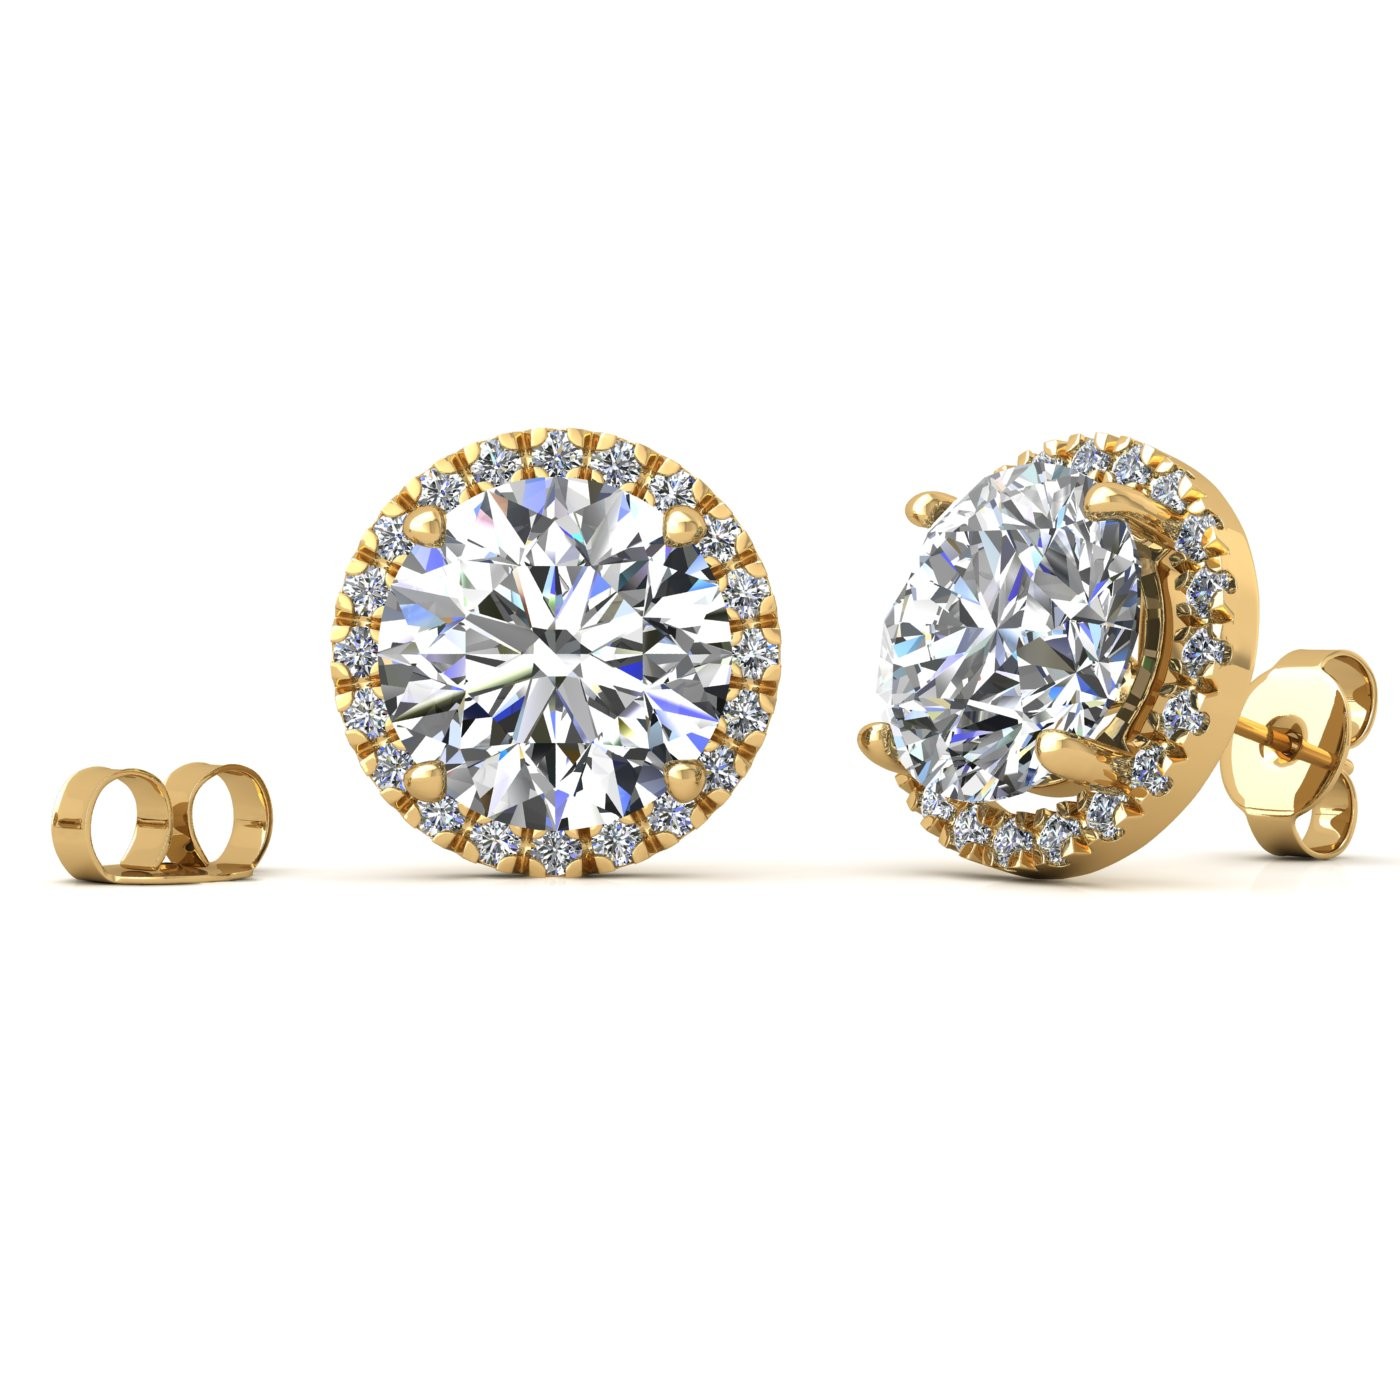 18k yellow gold  1,5 ct each (3,0 tcw) 4 prongs round shape diamond earrings with diamond pavÉ set halo Photos & images